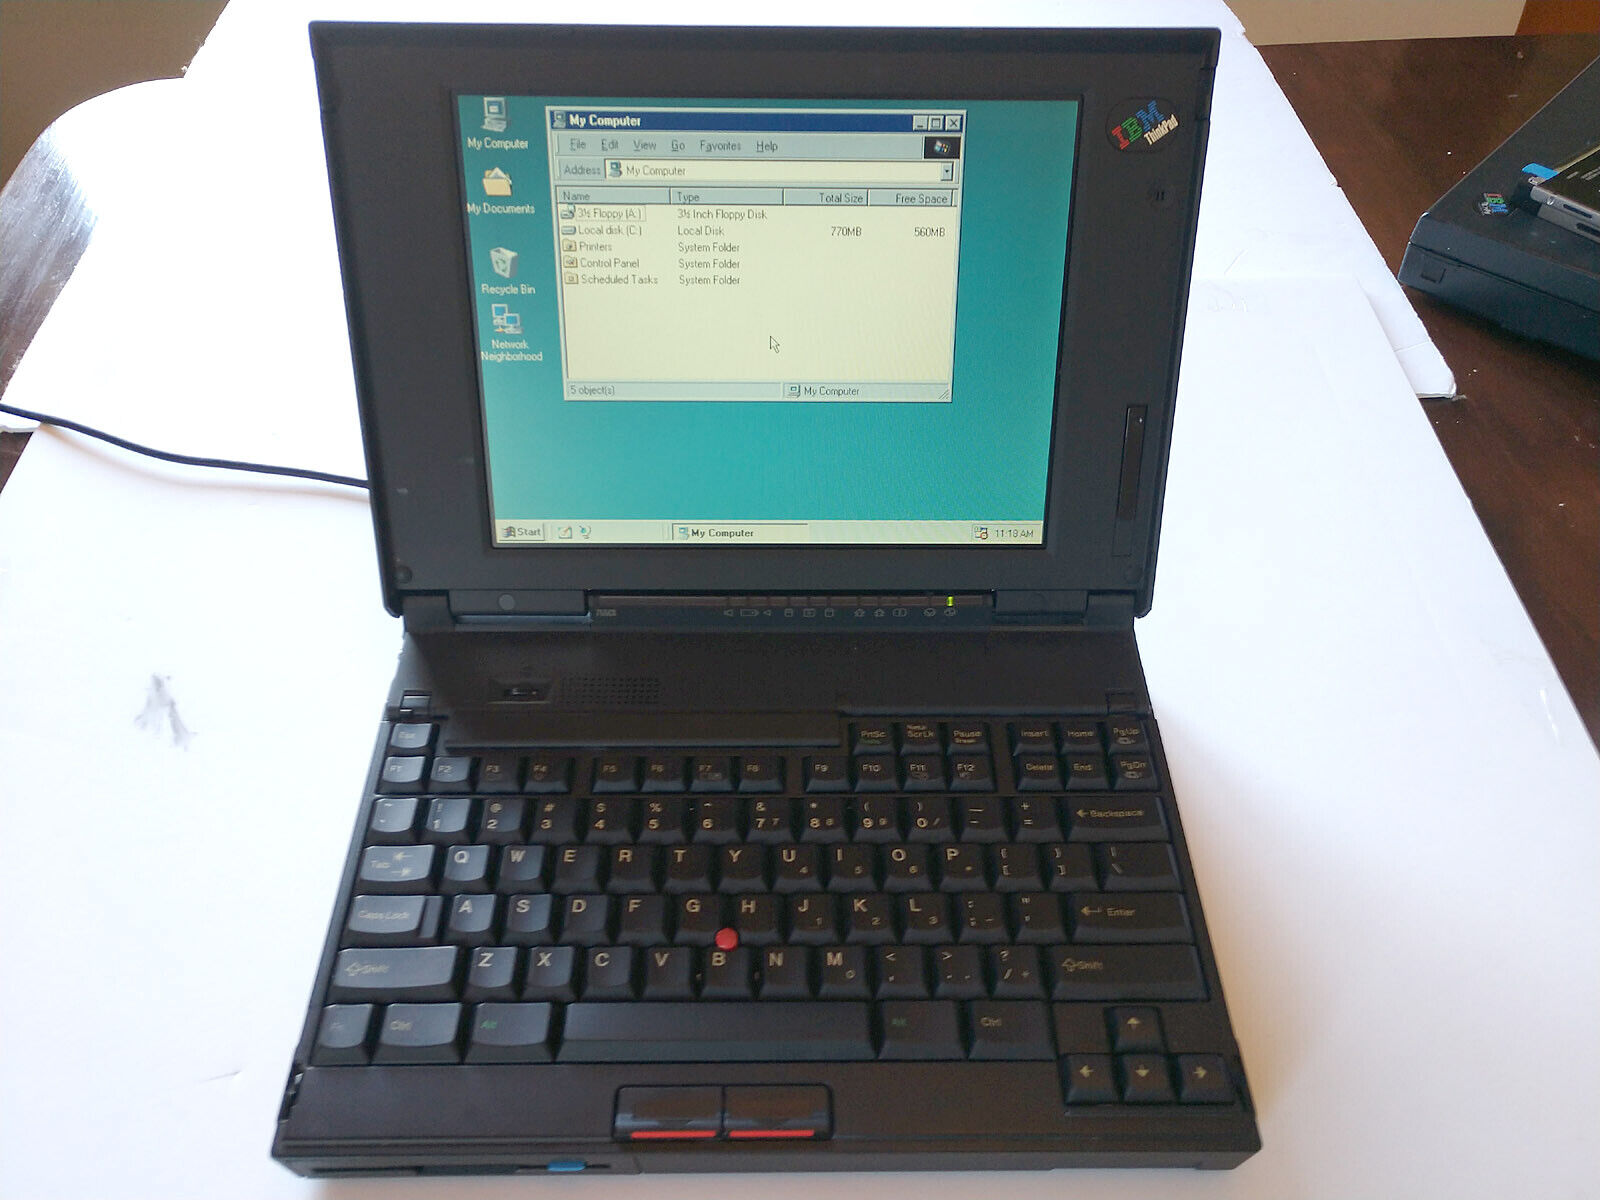 IBM ThinkPad 755CX Pentium 75 24MB 810MB HDD - CANADA